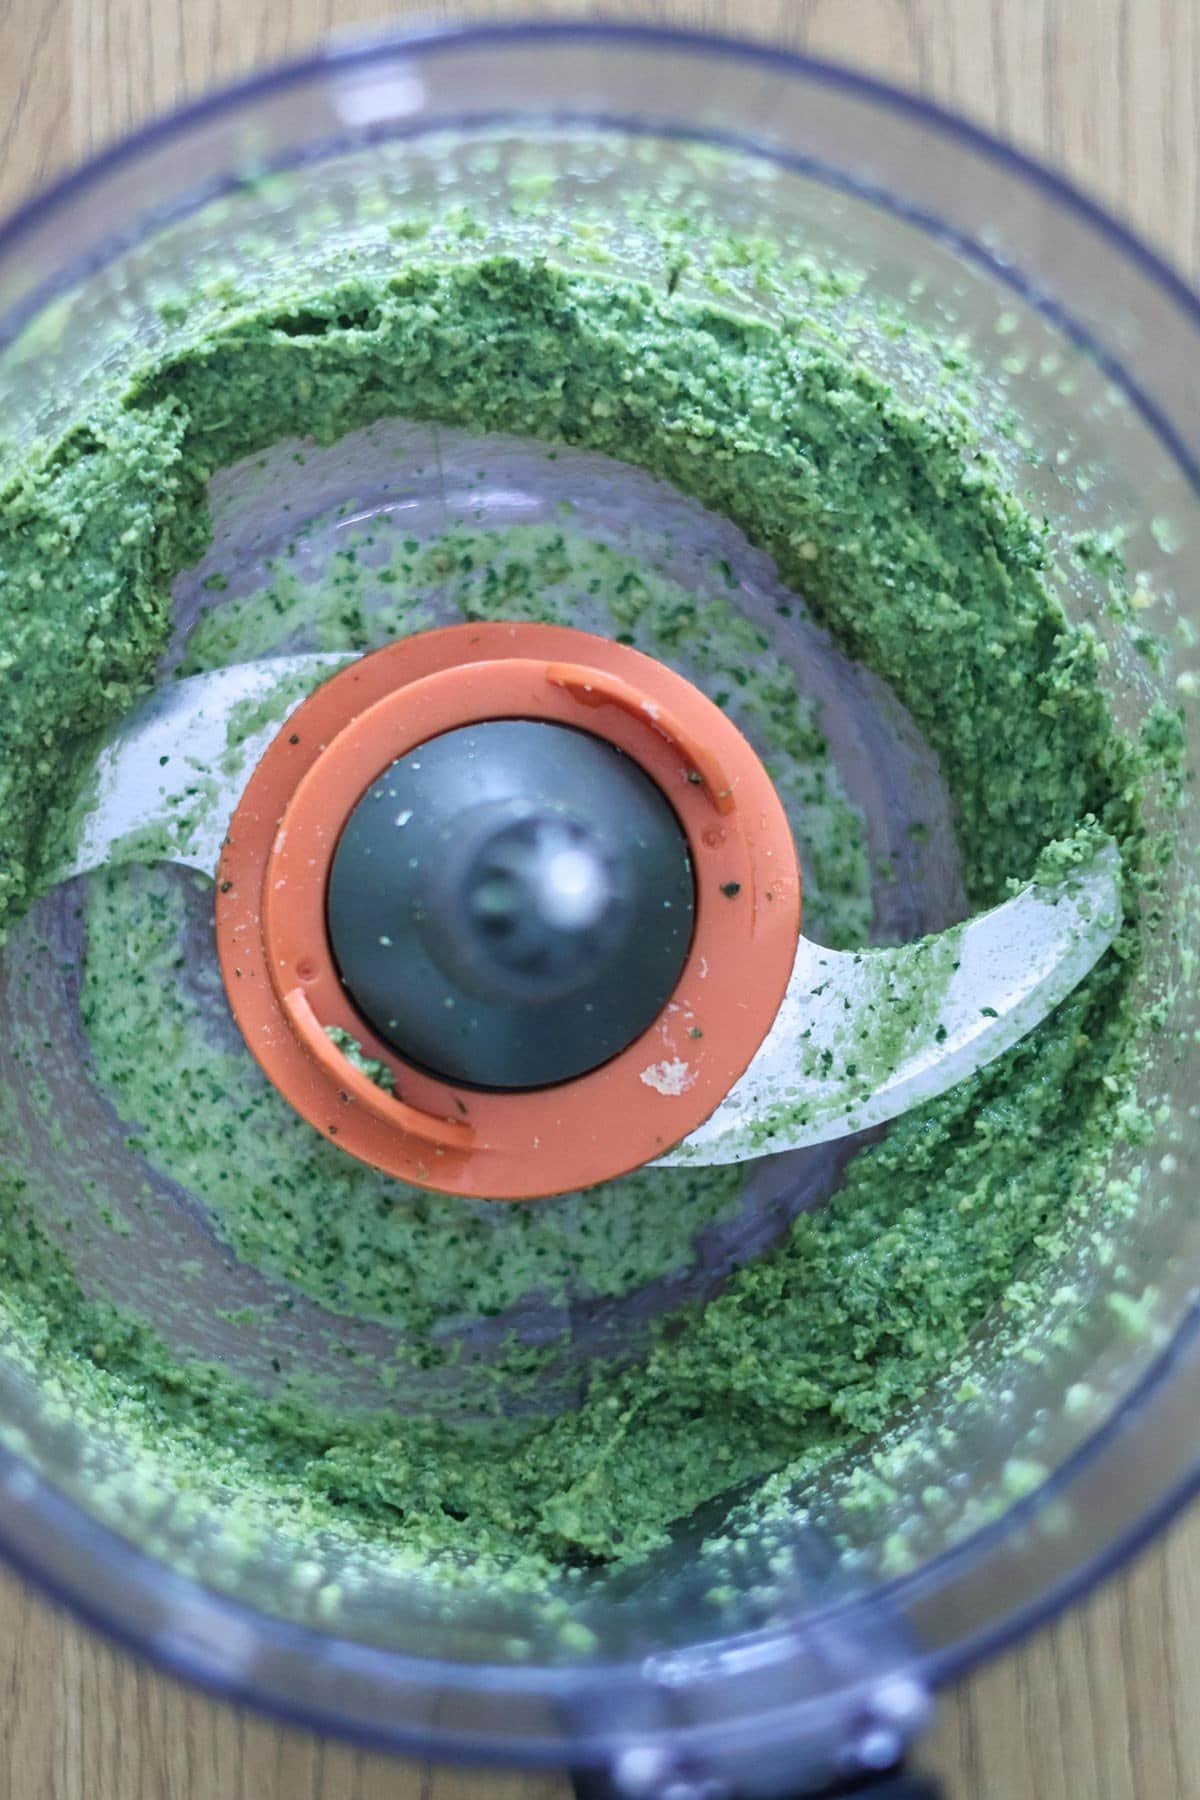 The vegan green pesto in a food processor.